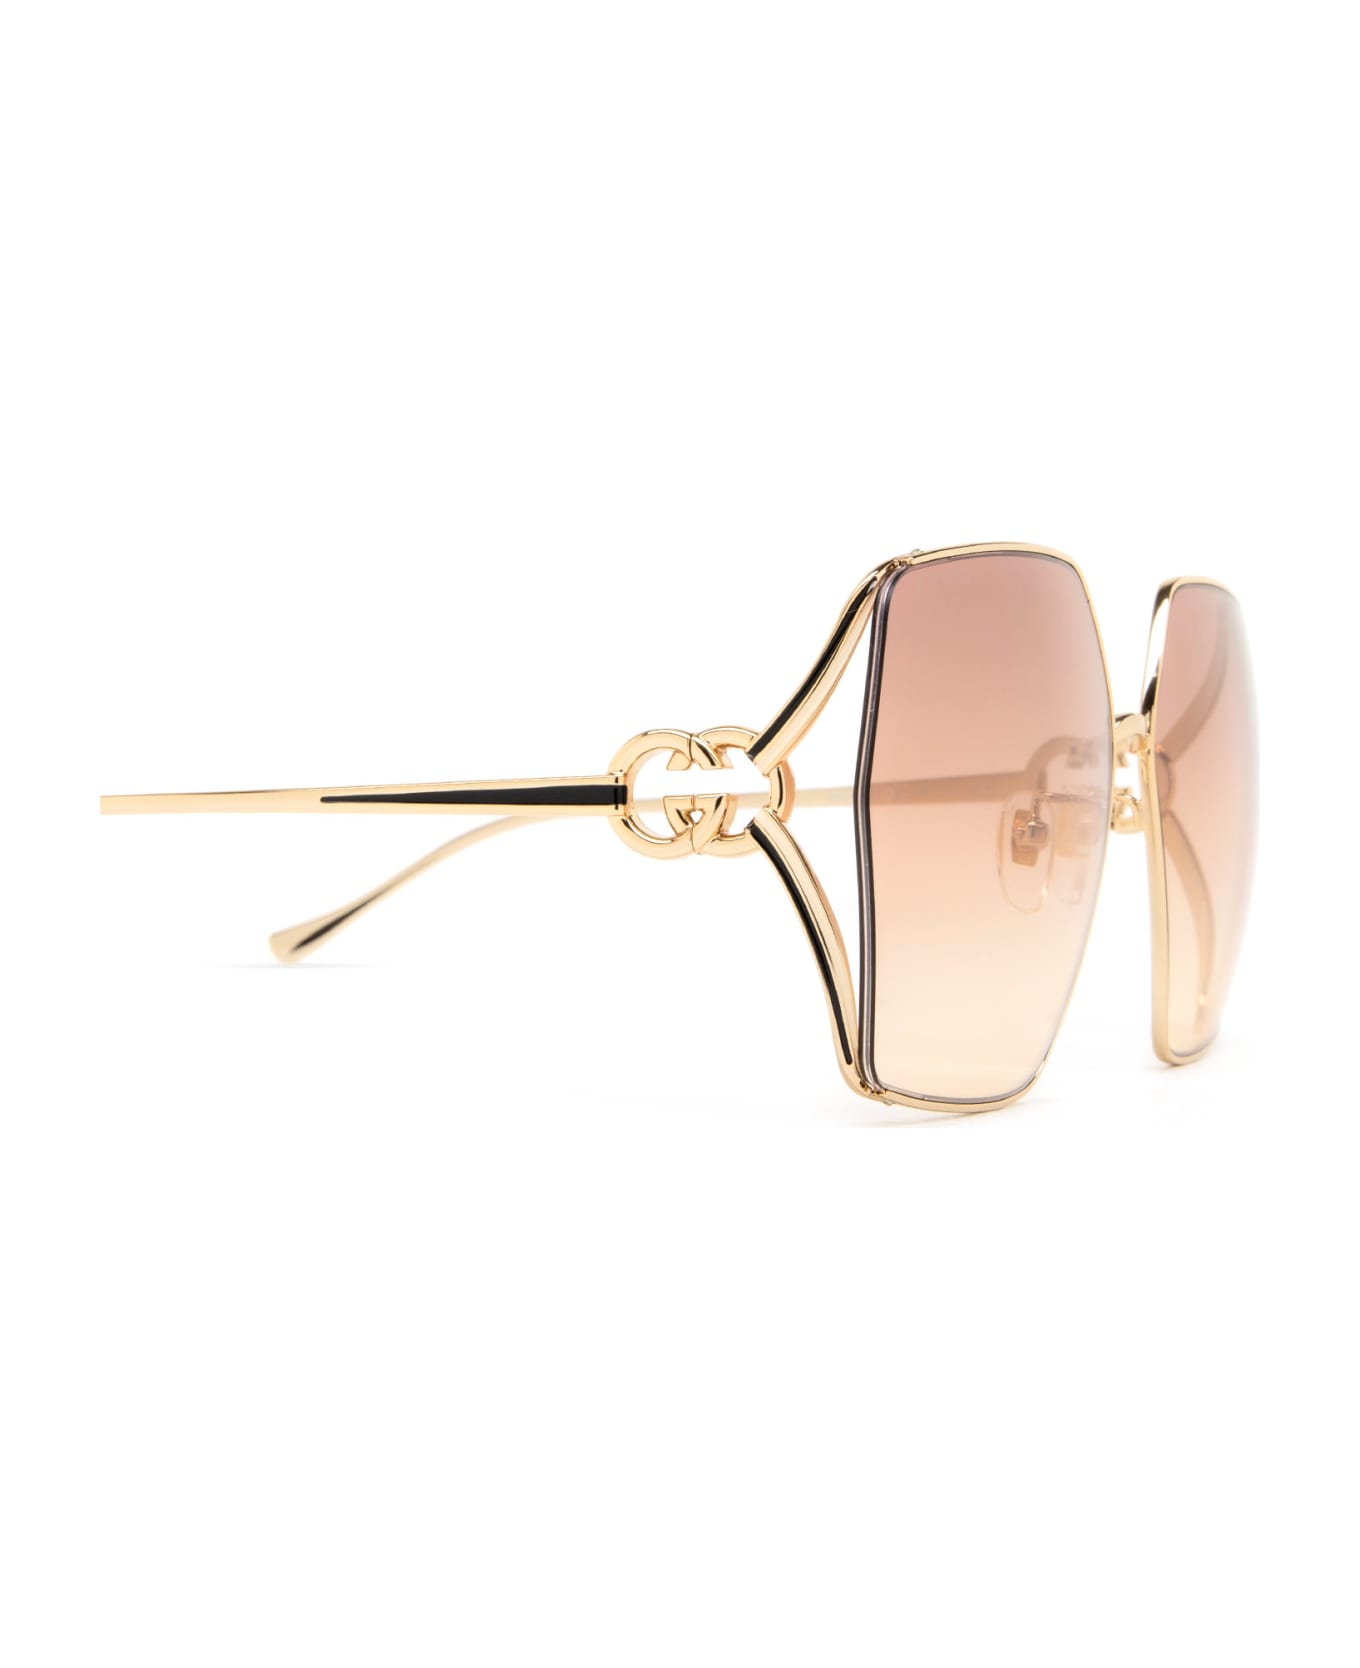 Gucci Eyewear Gg1322sa Gold Sunglasses - Gold